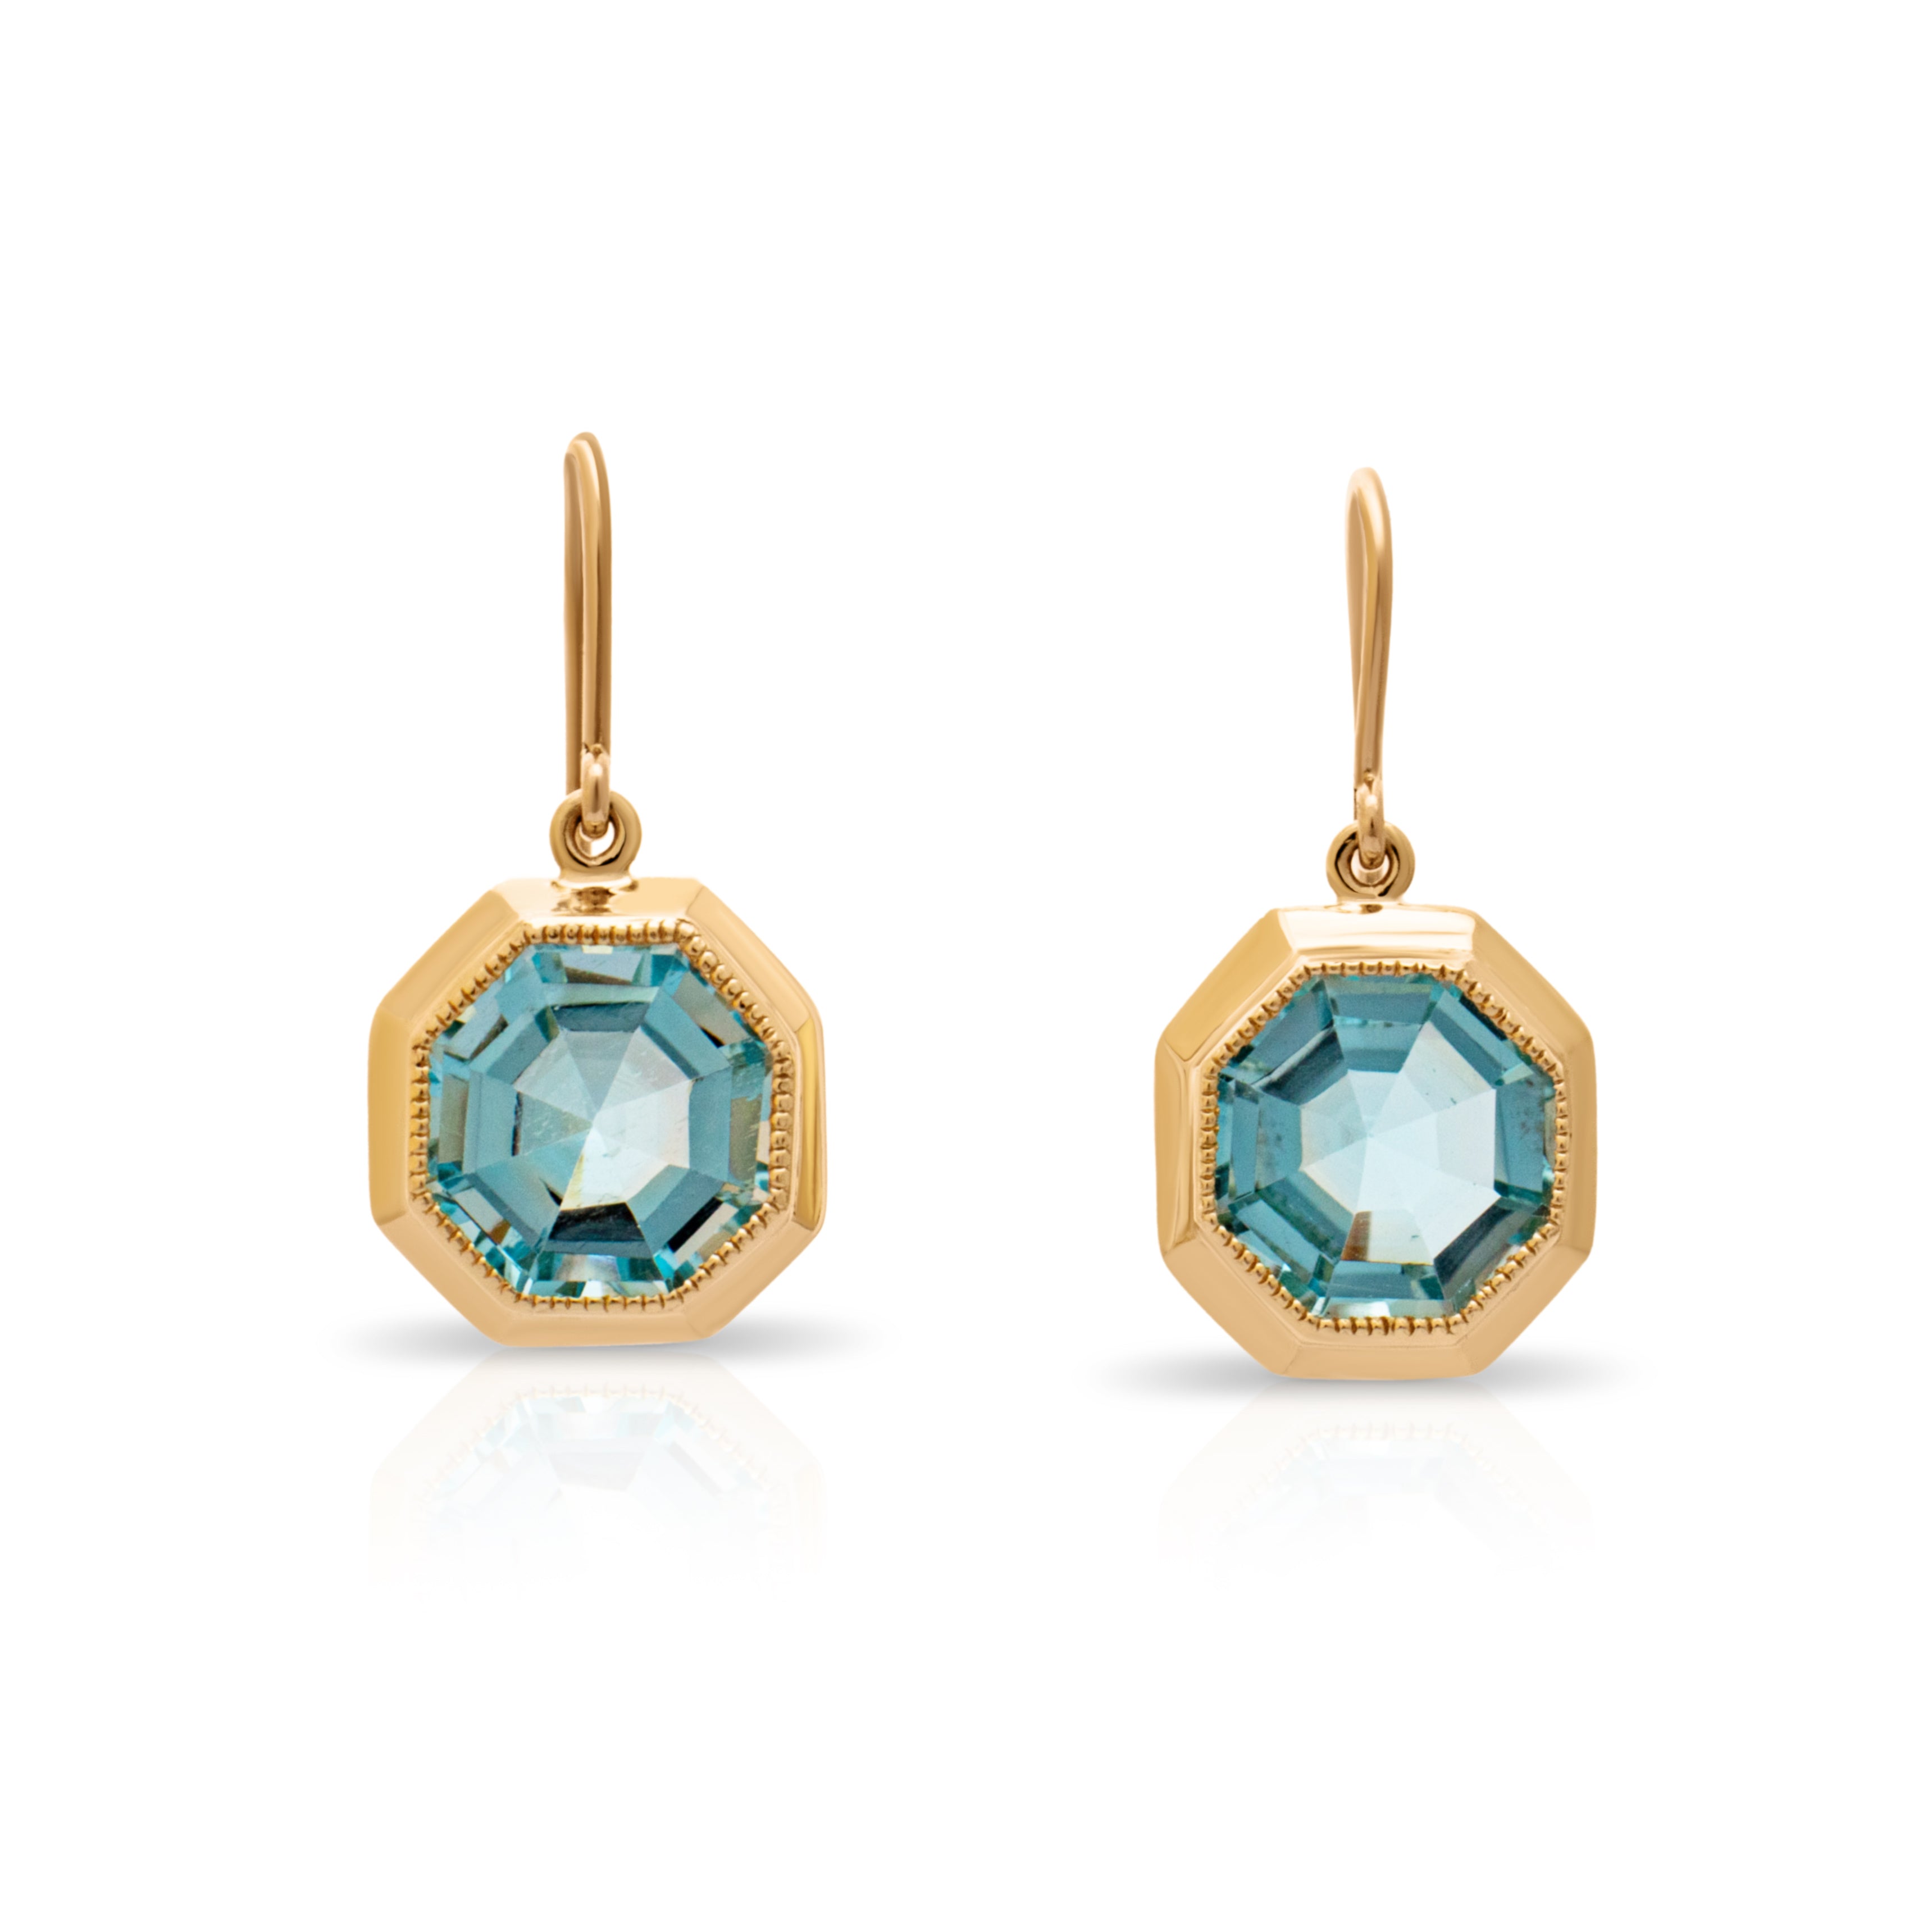 Large Topaz drop earrings. Solid gold and topaz earrings. Large gemstone drop earrings. Serena Ansell Bespoke jewellery design. Bespoke jewellery designer London. Bespoke earrings London.  